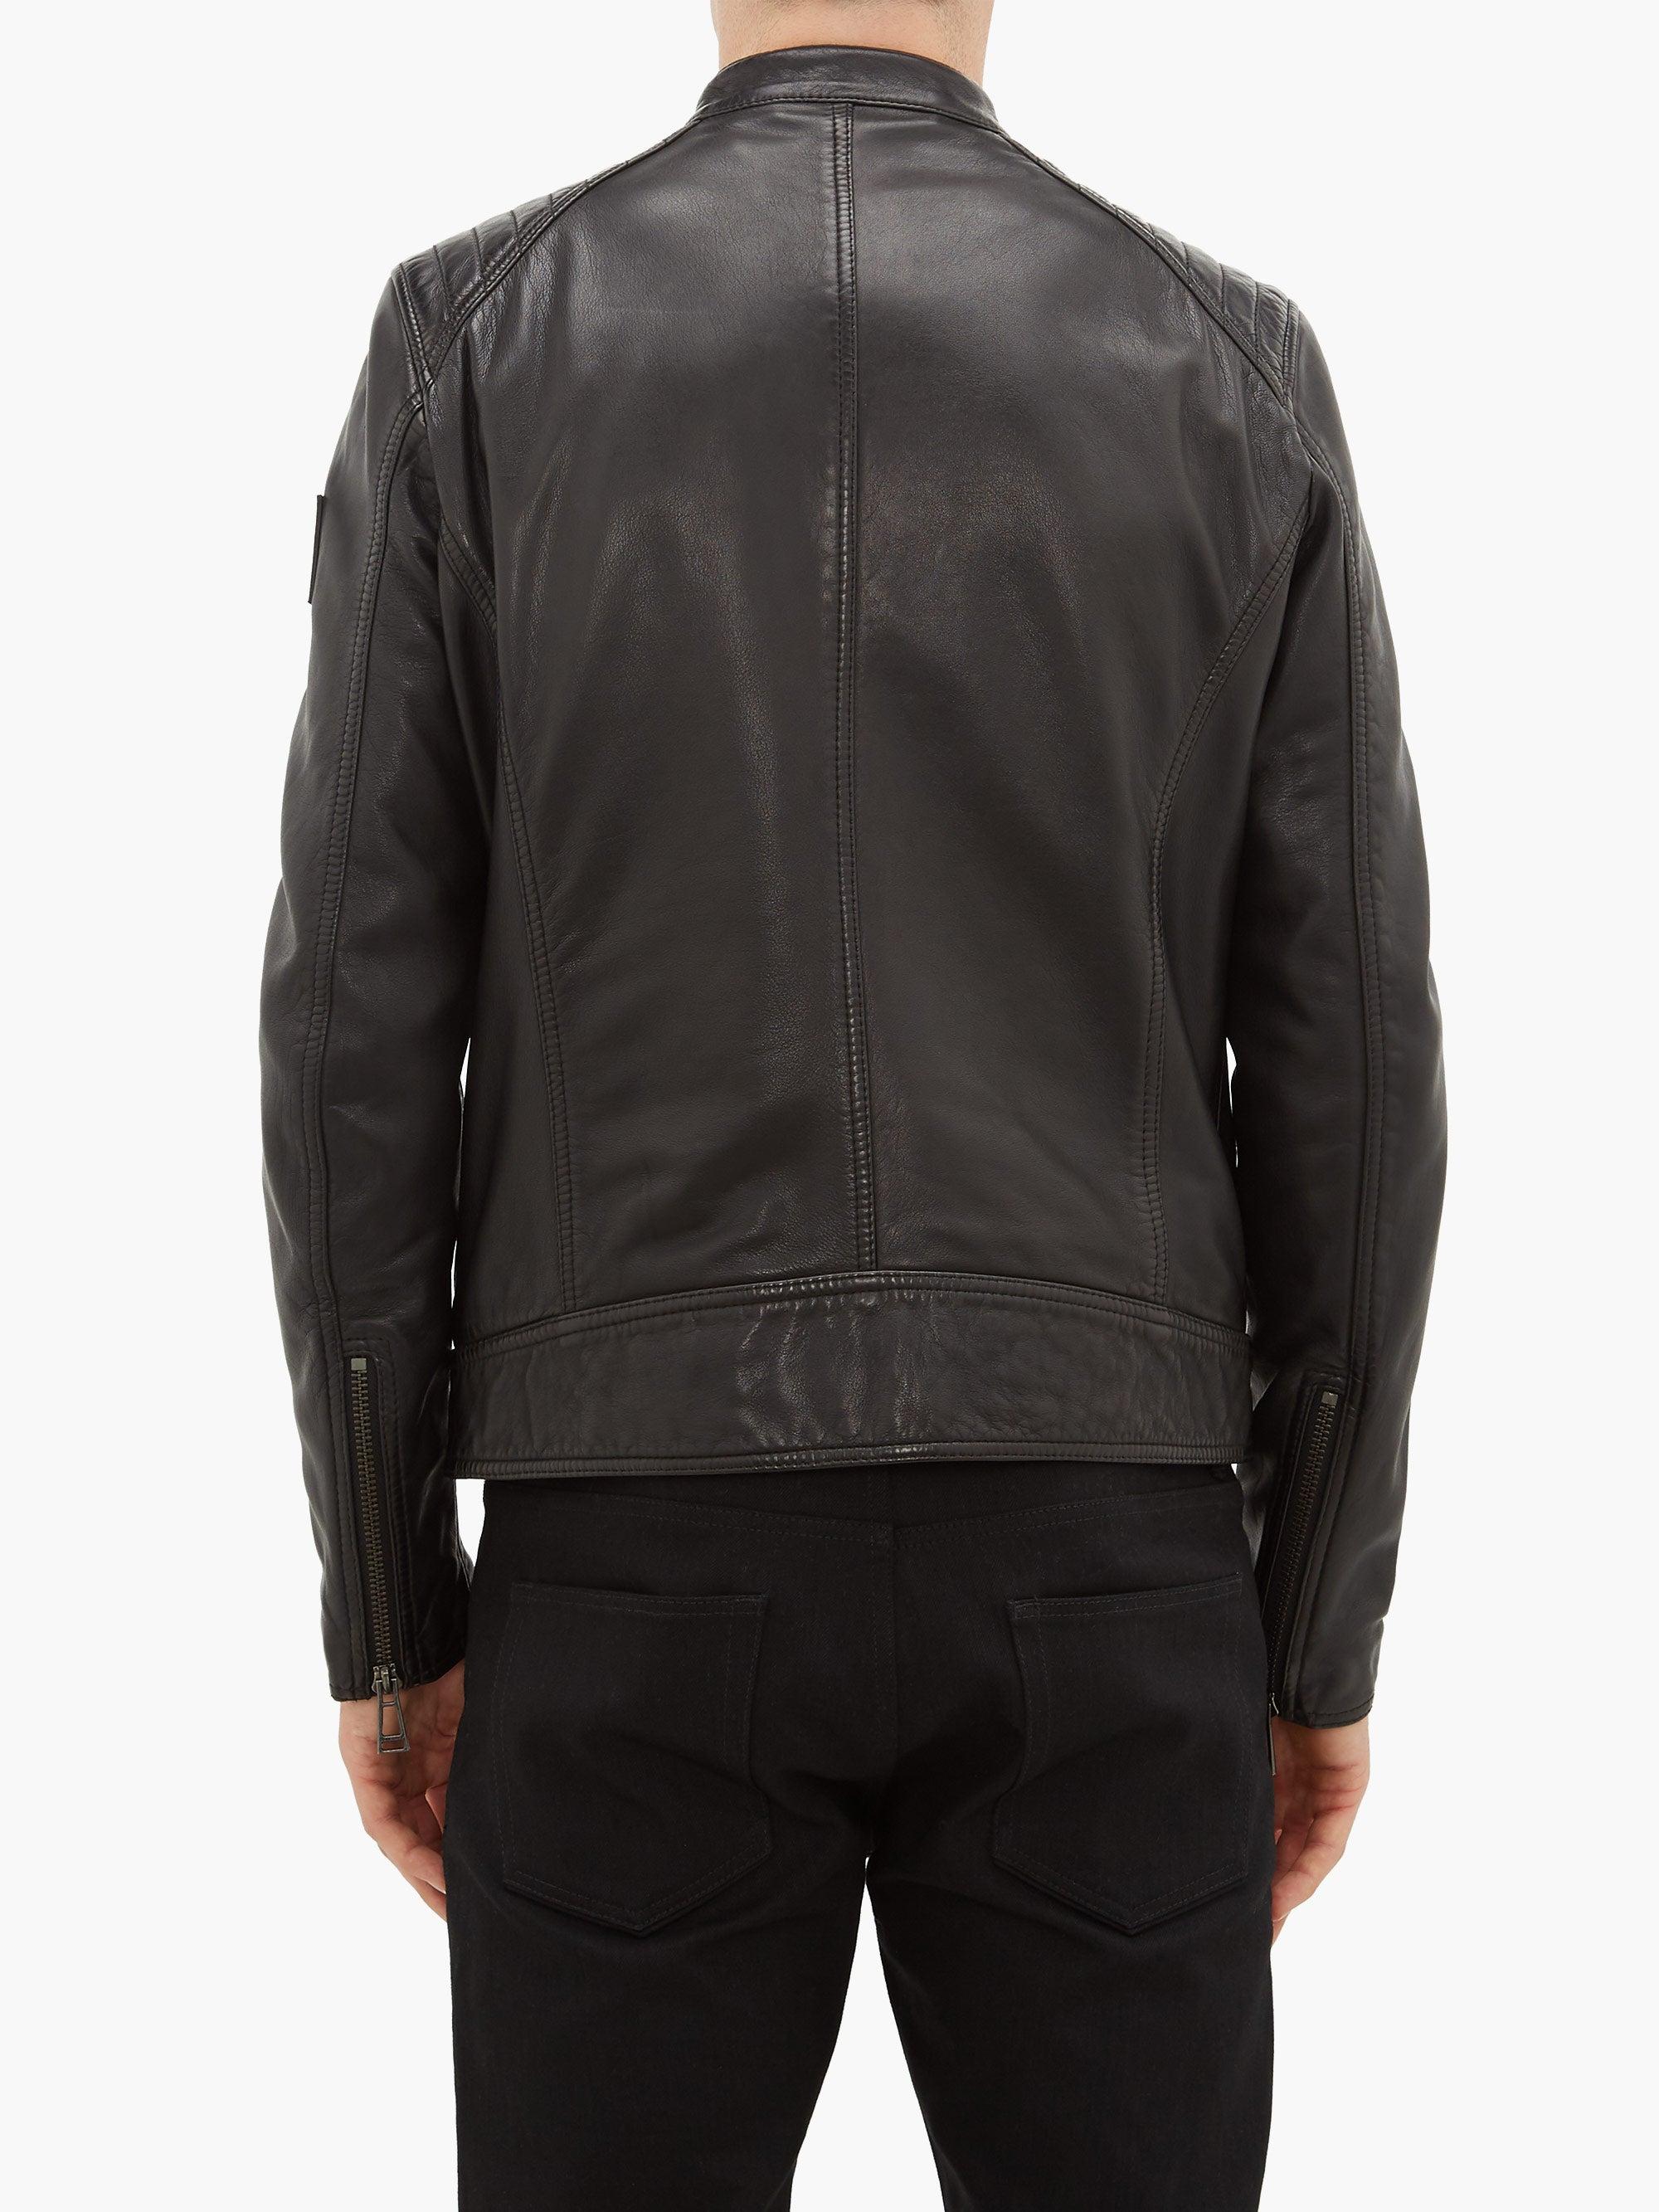 Belstaff V Racer Lambskin-leather Jacket in Black for Men - Lyst